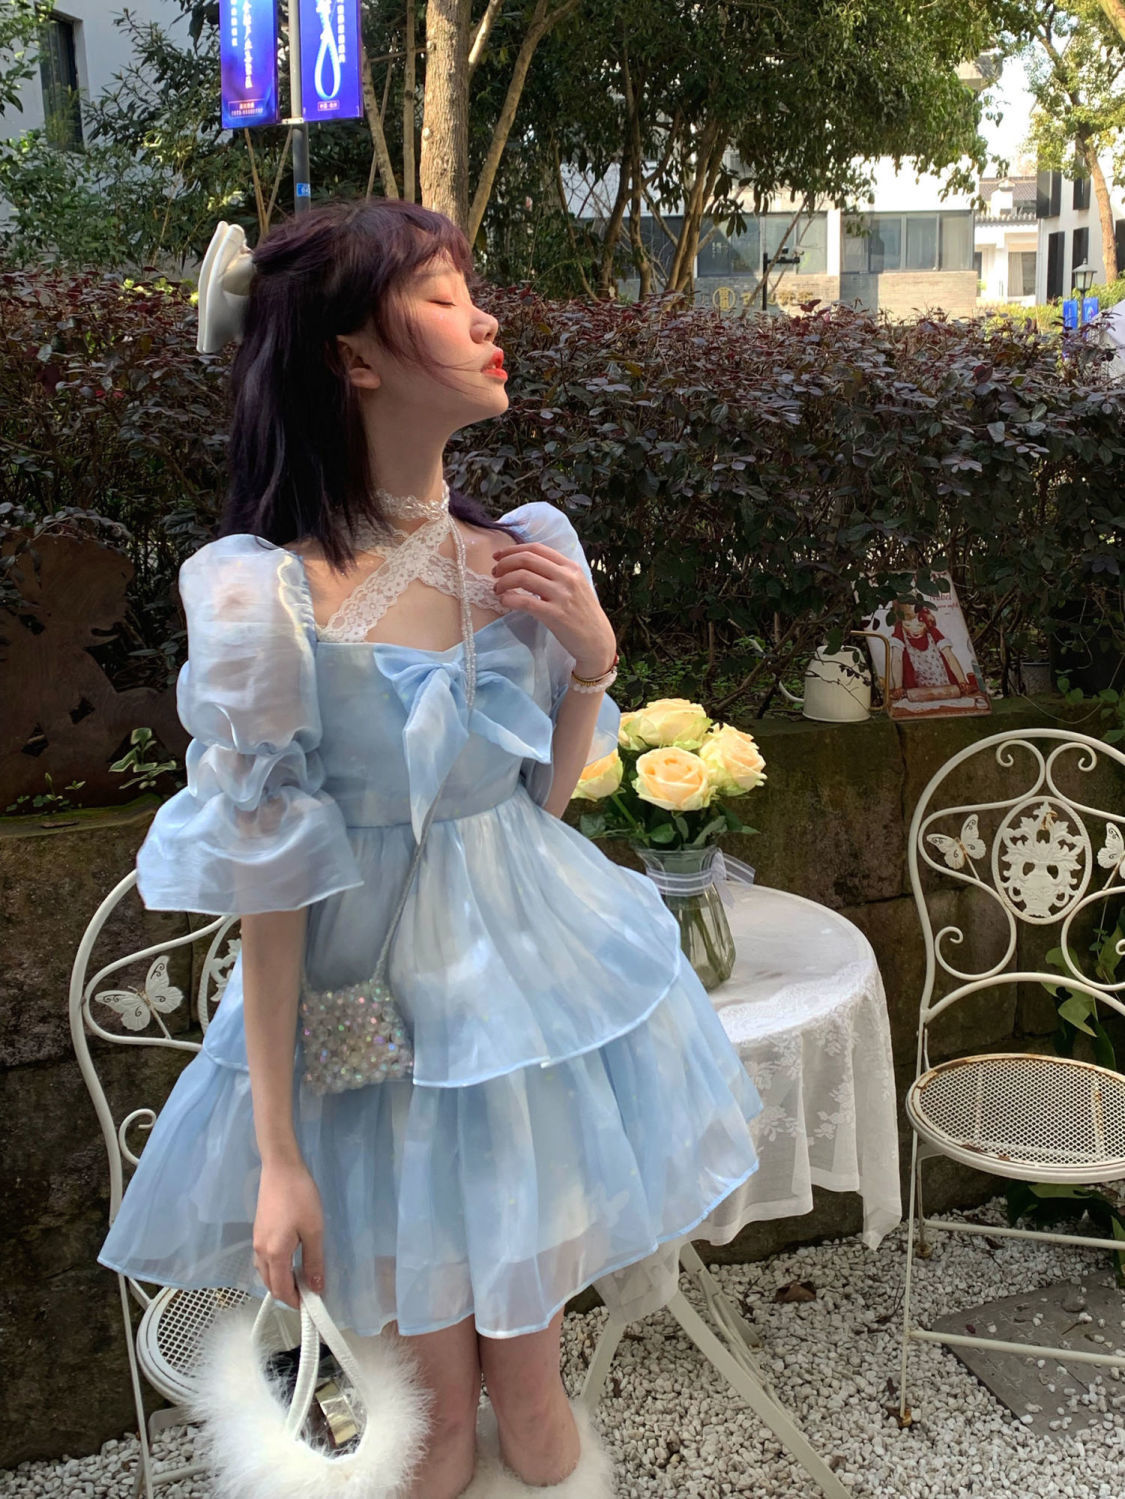 POSHOOT Blue Lolita Kawaii Dress Women Summer 2022 Chiffon Korean Sexy Elegant Party Mini Dresses Lace Casual Cute Princess Fairy Dress